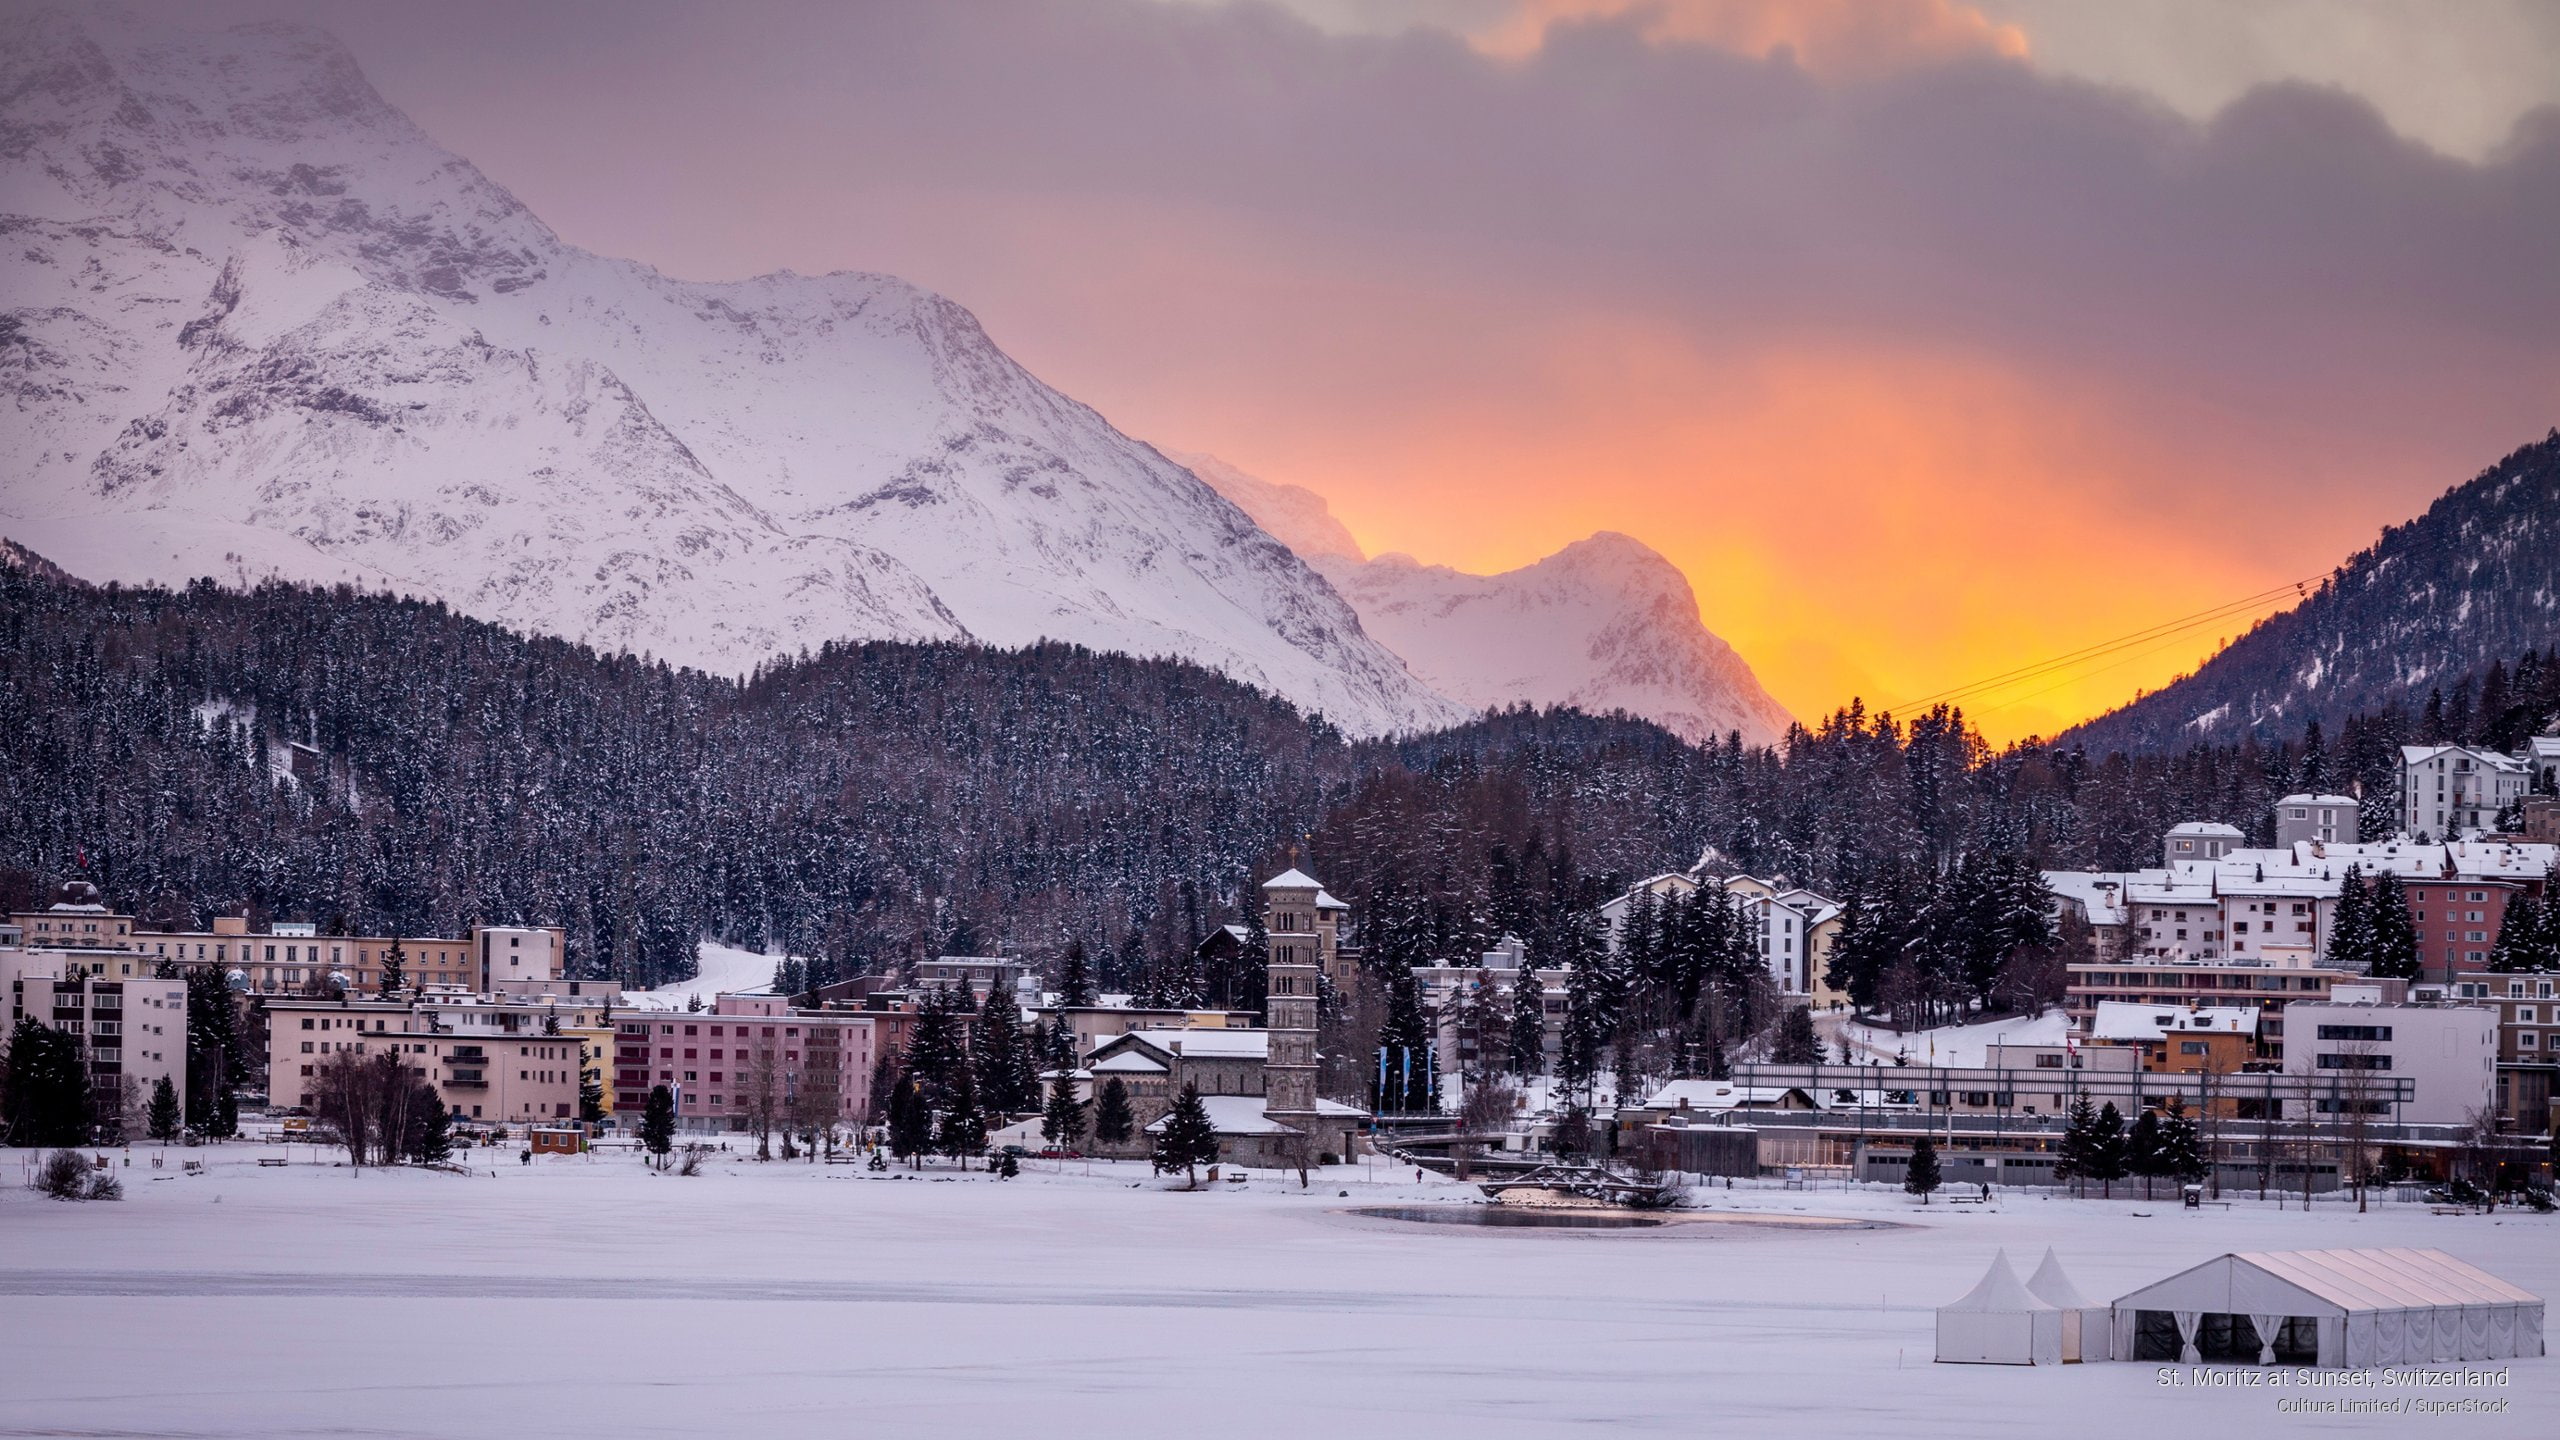 St. Moritz at Sunset, Switzerland, Europe